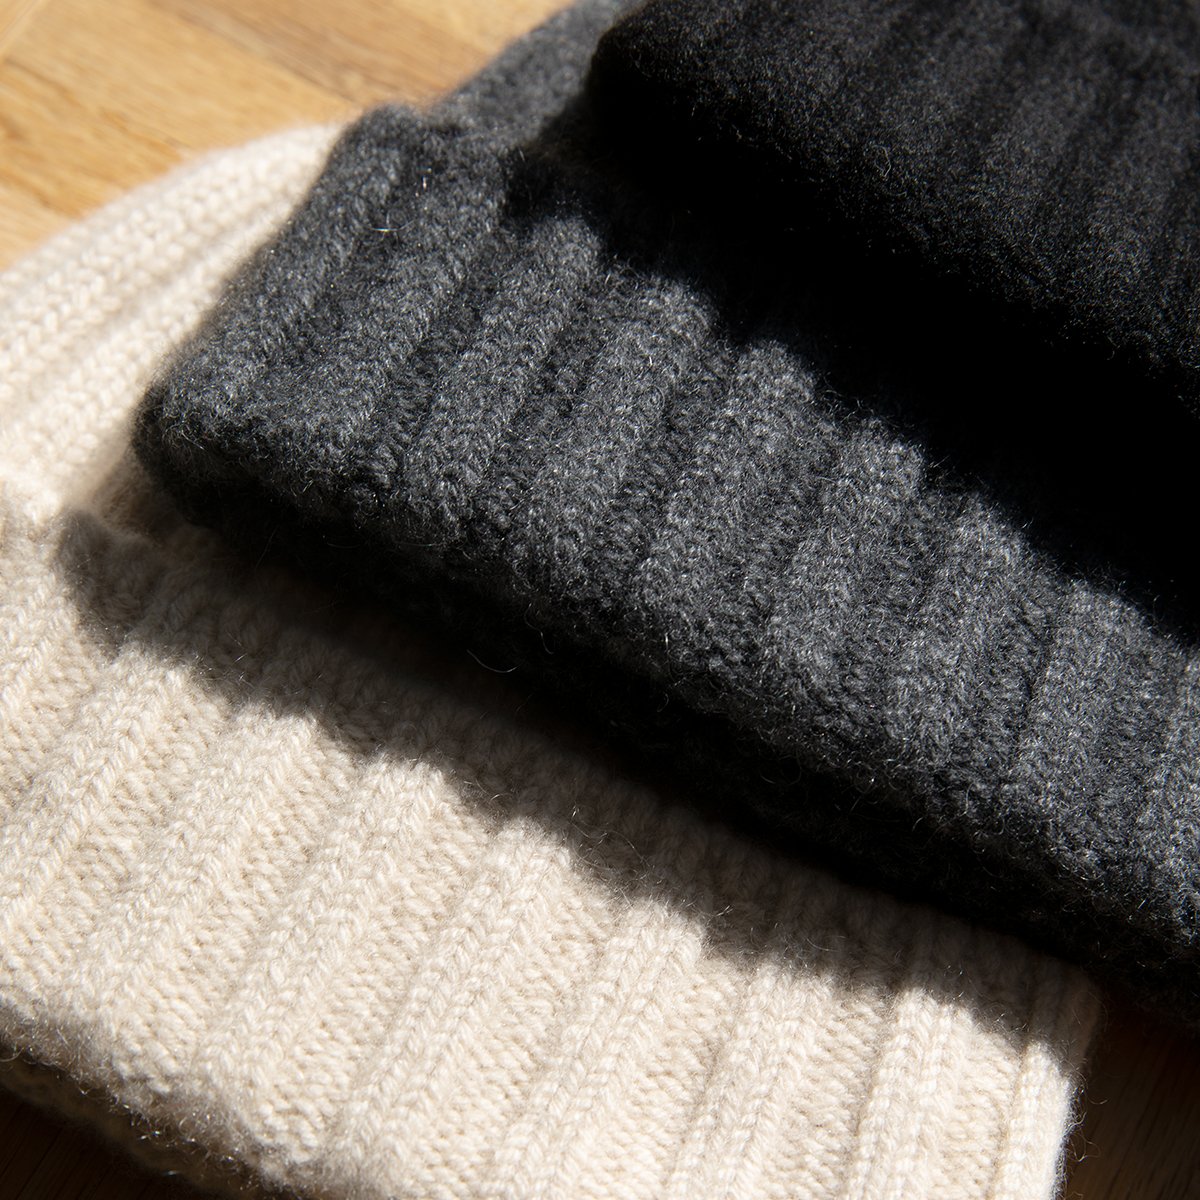 Knit Cap in Cashmere 2x2 Rib - Olive